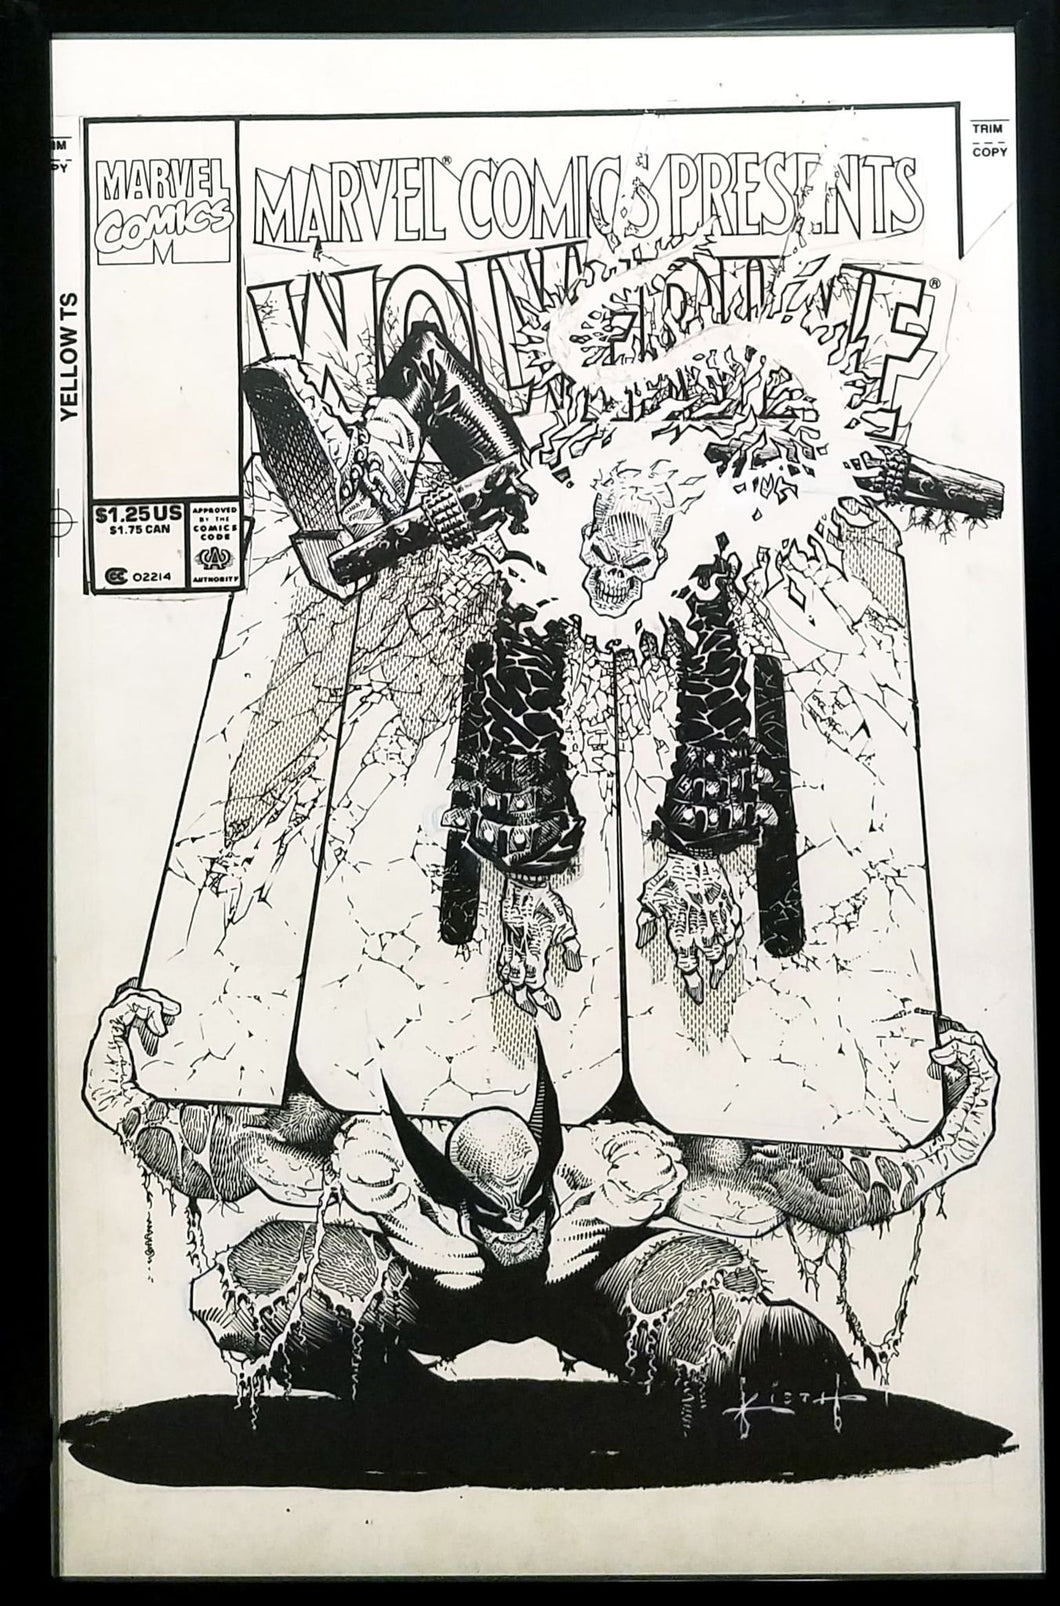 Marvel Comics Presents Wolverine #100 Sam Kieth 11x17 FRAMED Original Art Poster